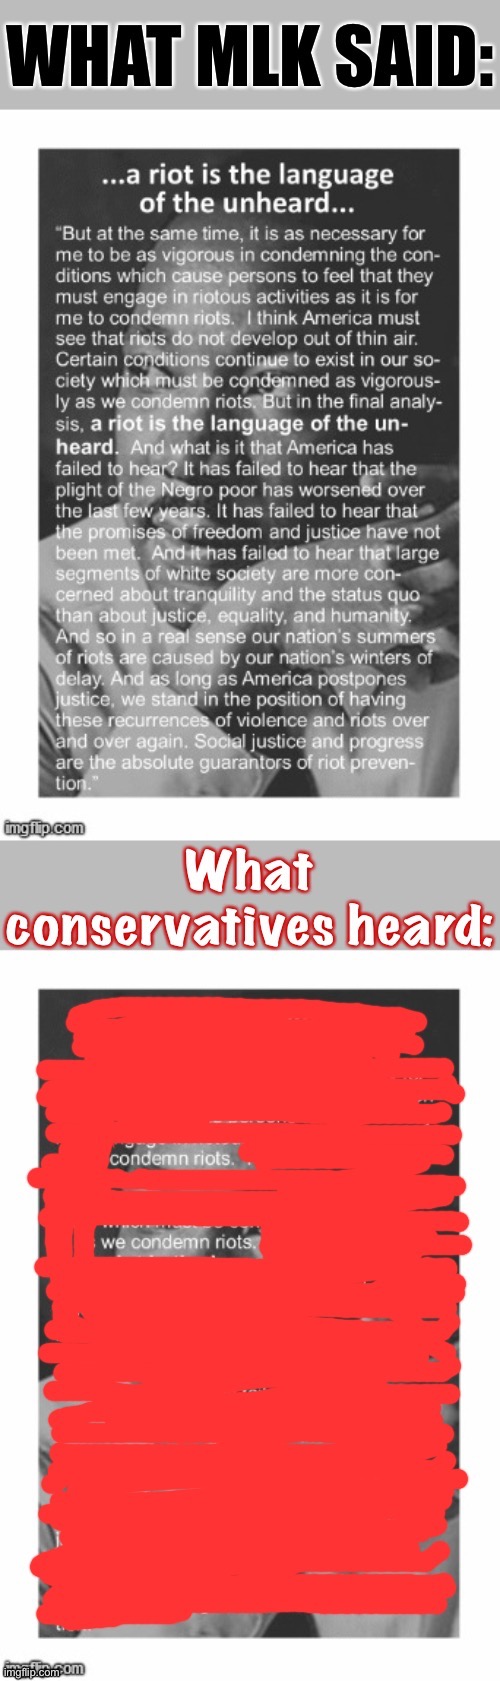 MLK quote riots conservative logic | image tagged in mlk quote riots conservative logic | made w/ Imgflip meme maker